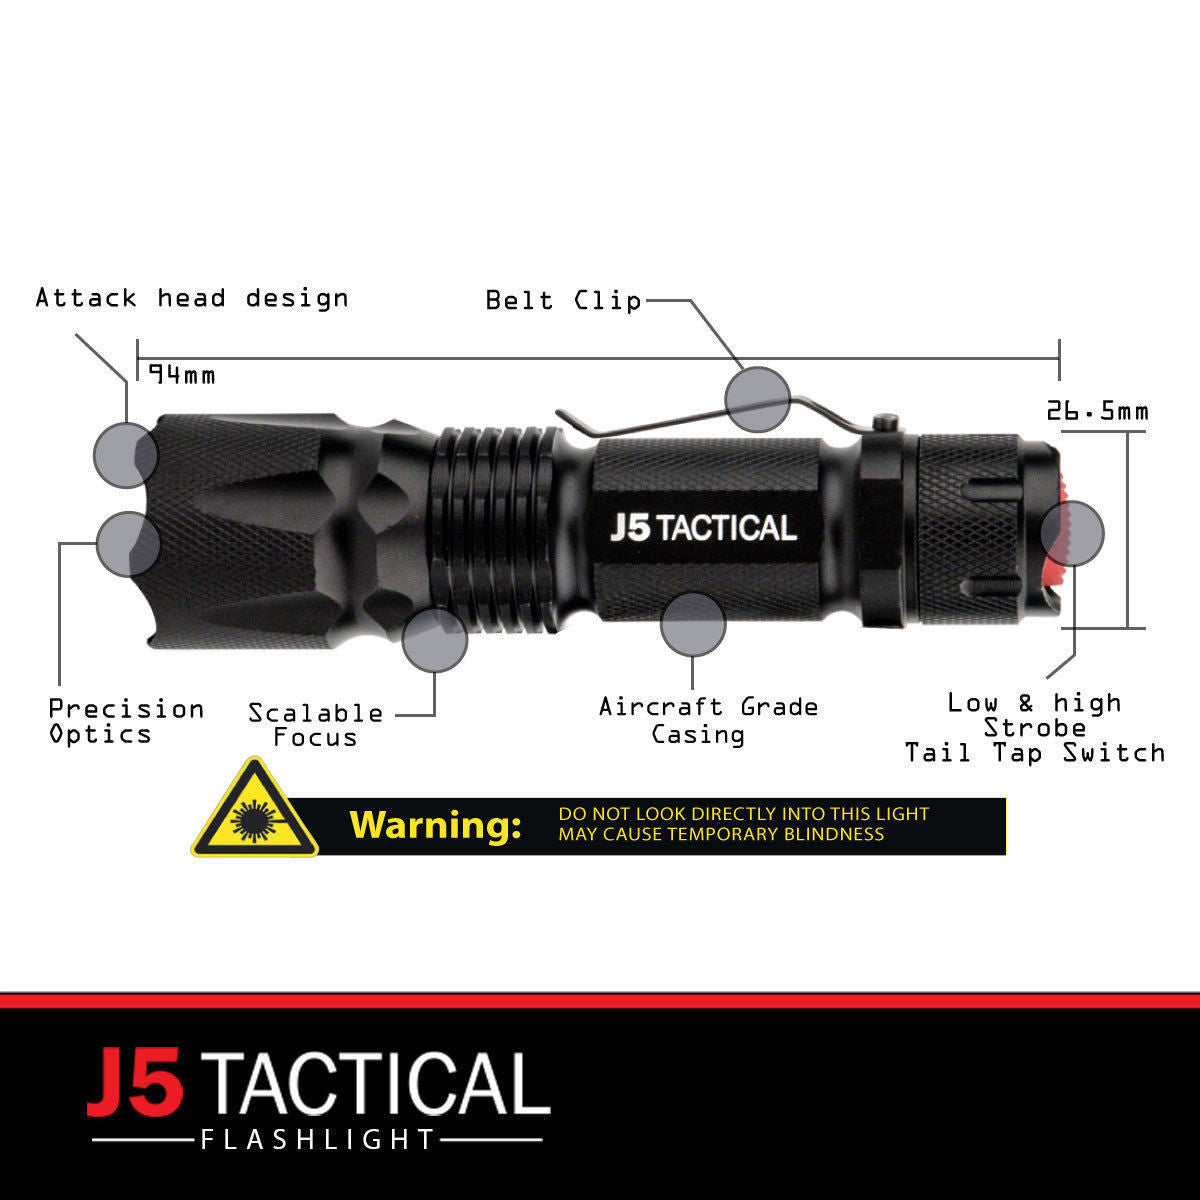 j5 Tactical flashlight specs